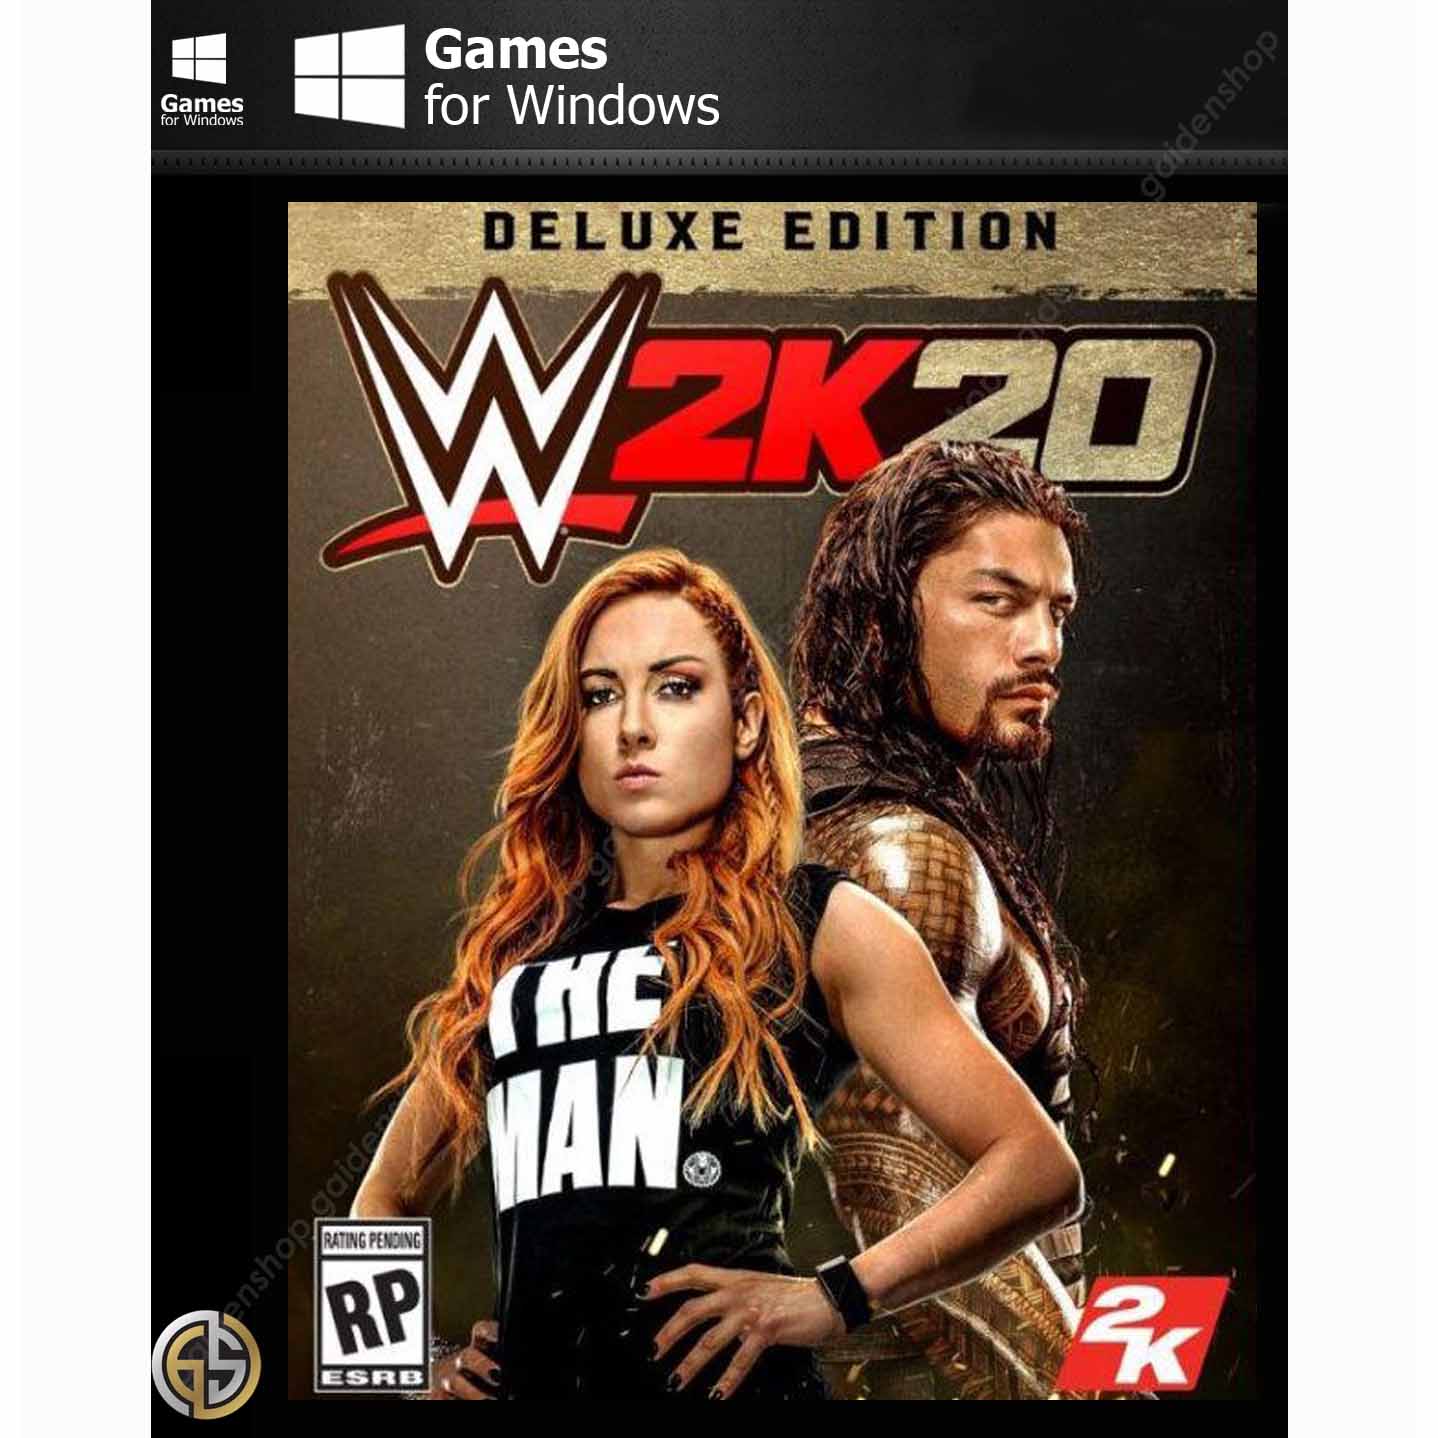 WWE 2K22 nWo 4-Life Edition - PC - Compre na Nuuvem